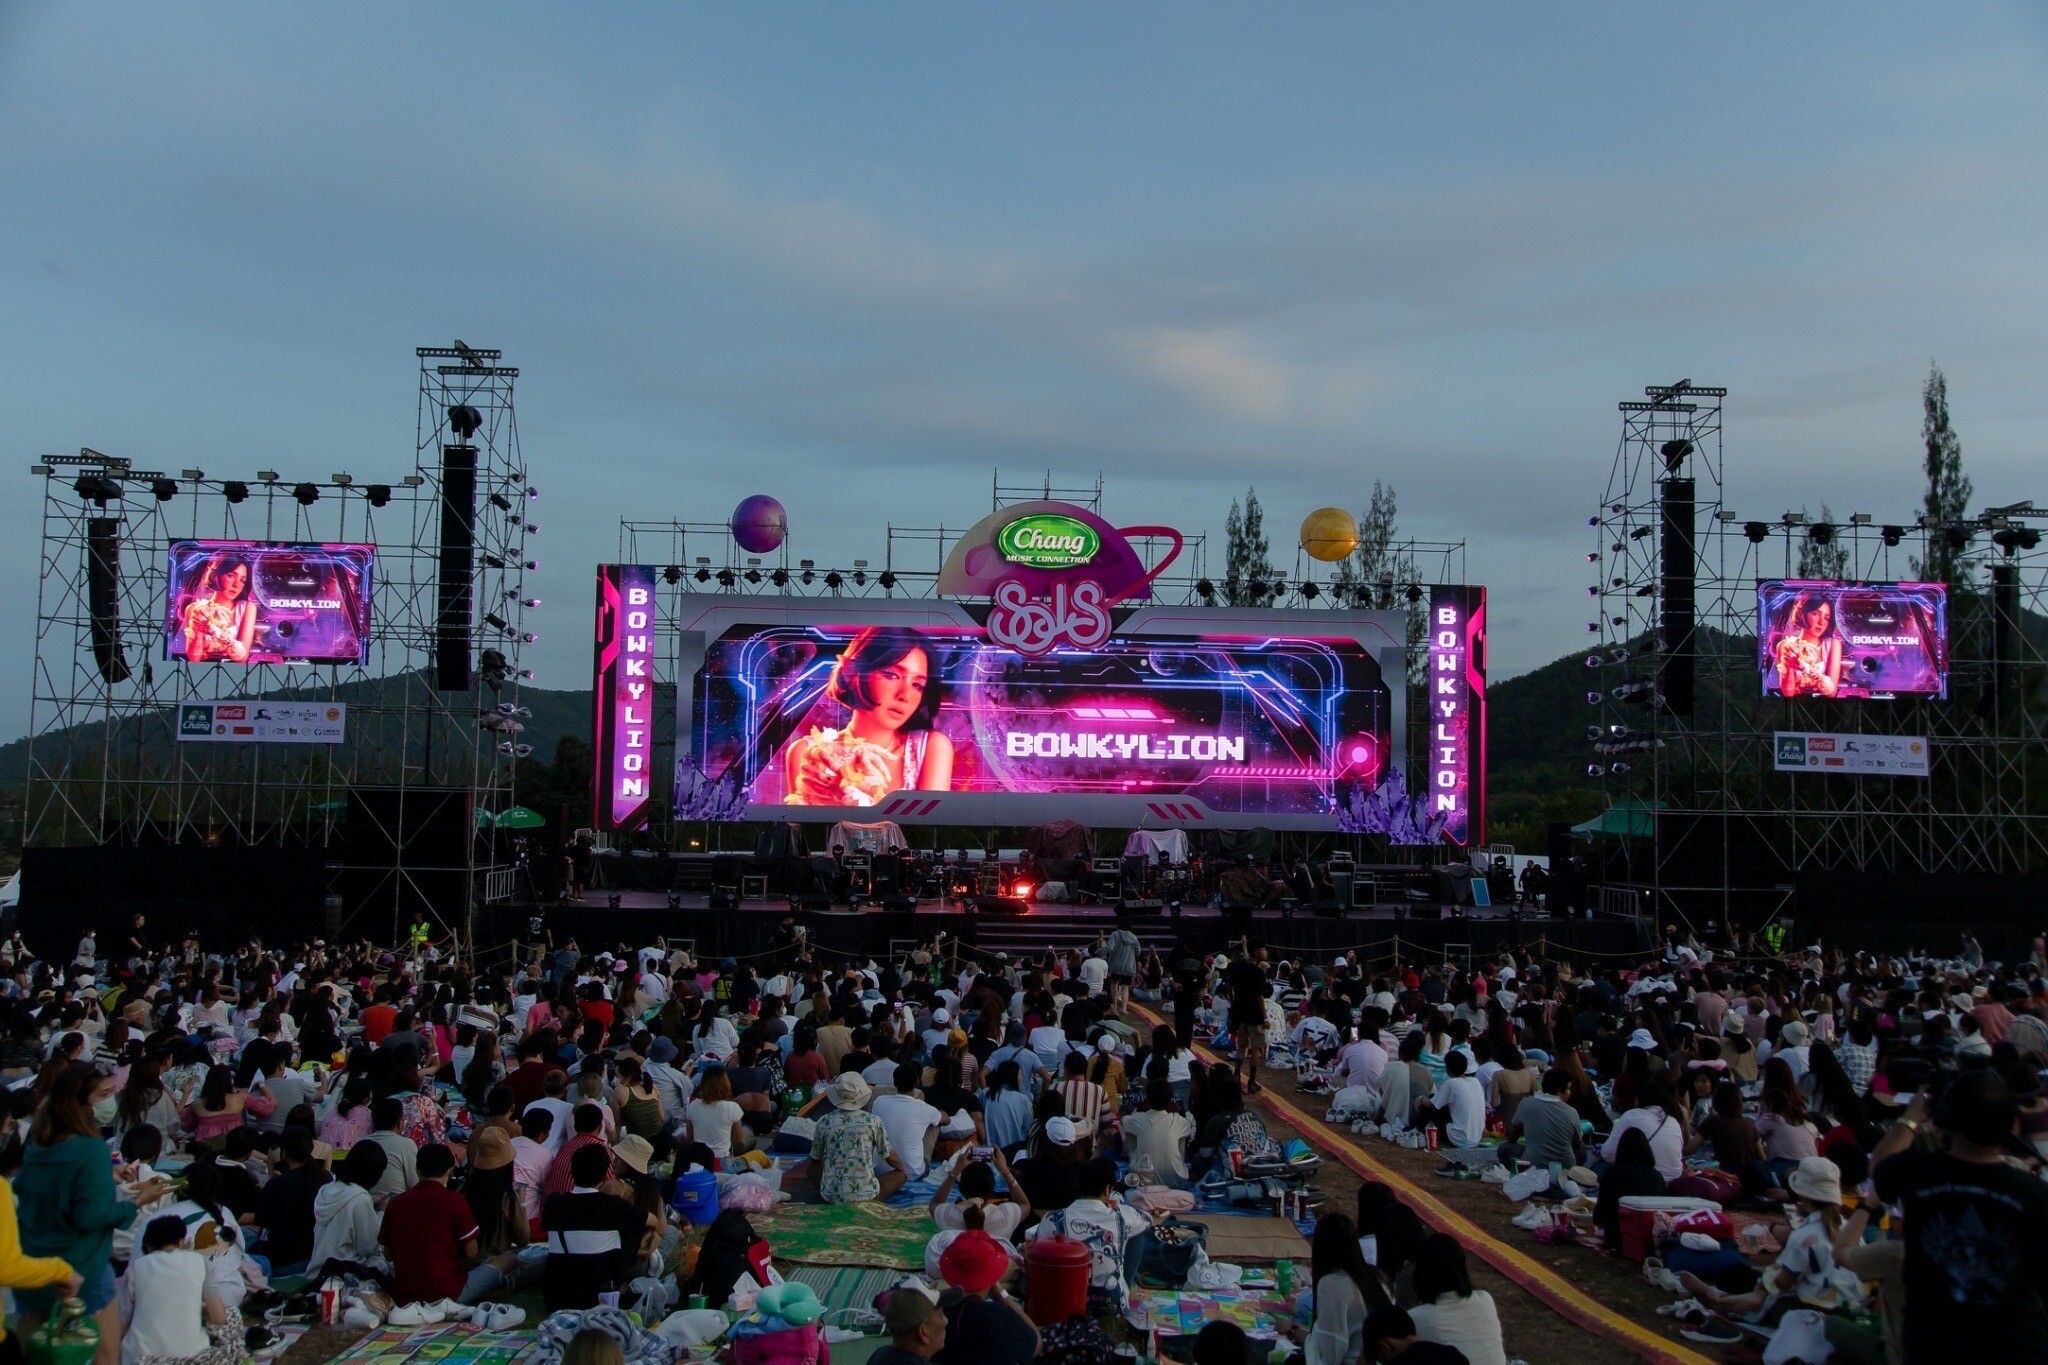 "Chang Music Connection presents Season of Love Song ครั้งที่ 12" ขนทัพ 16 ศิลปิน พุ่งทะยานเสิร์ฟบทเพลงที่ทุกคนคุ้นเคย บนดวงดาวแห่งรักตลอด 16 ชั่วโมง